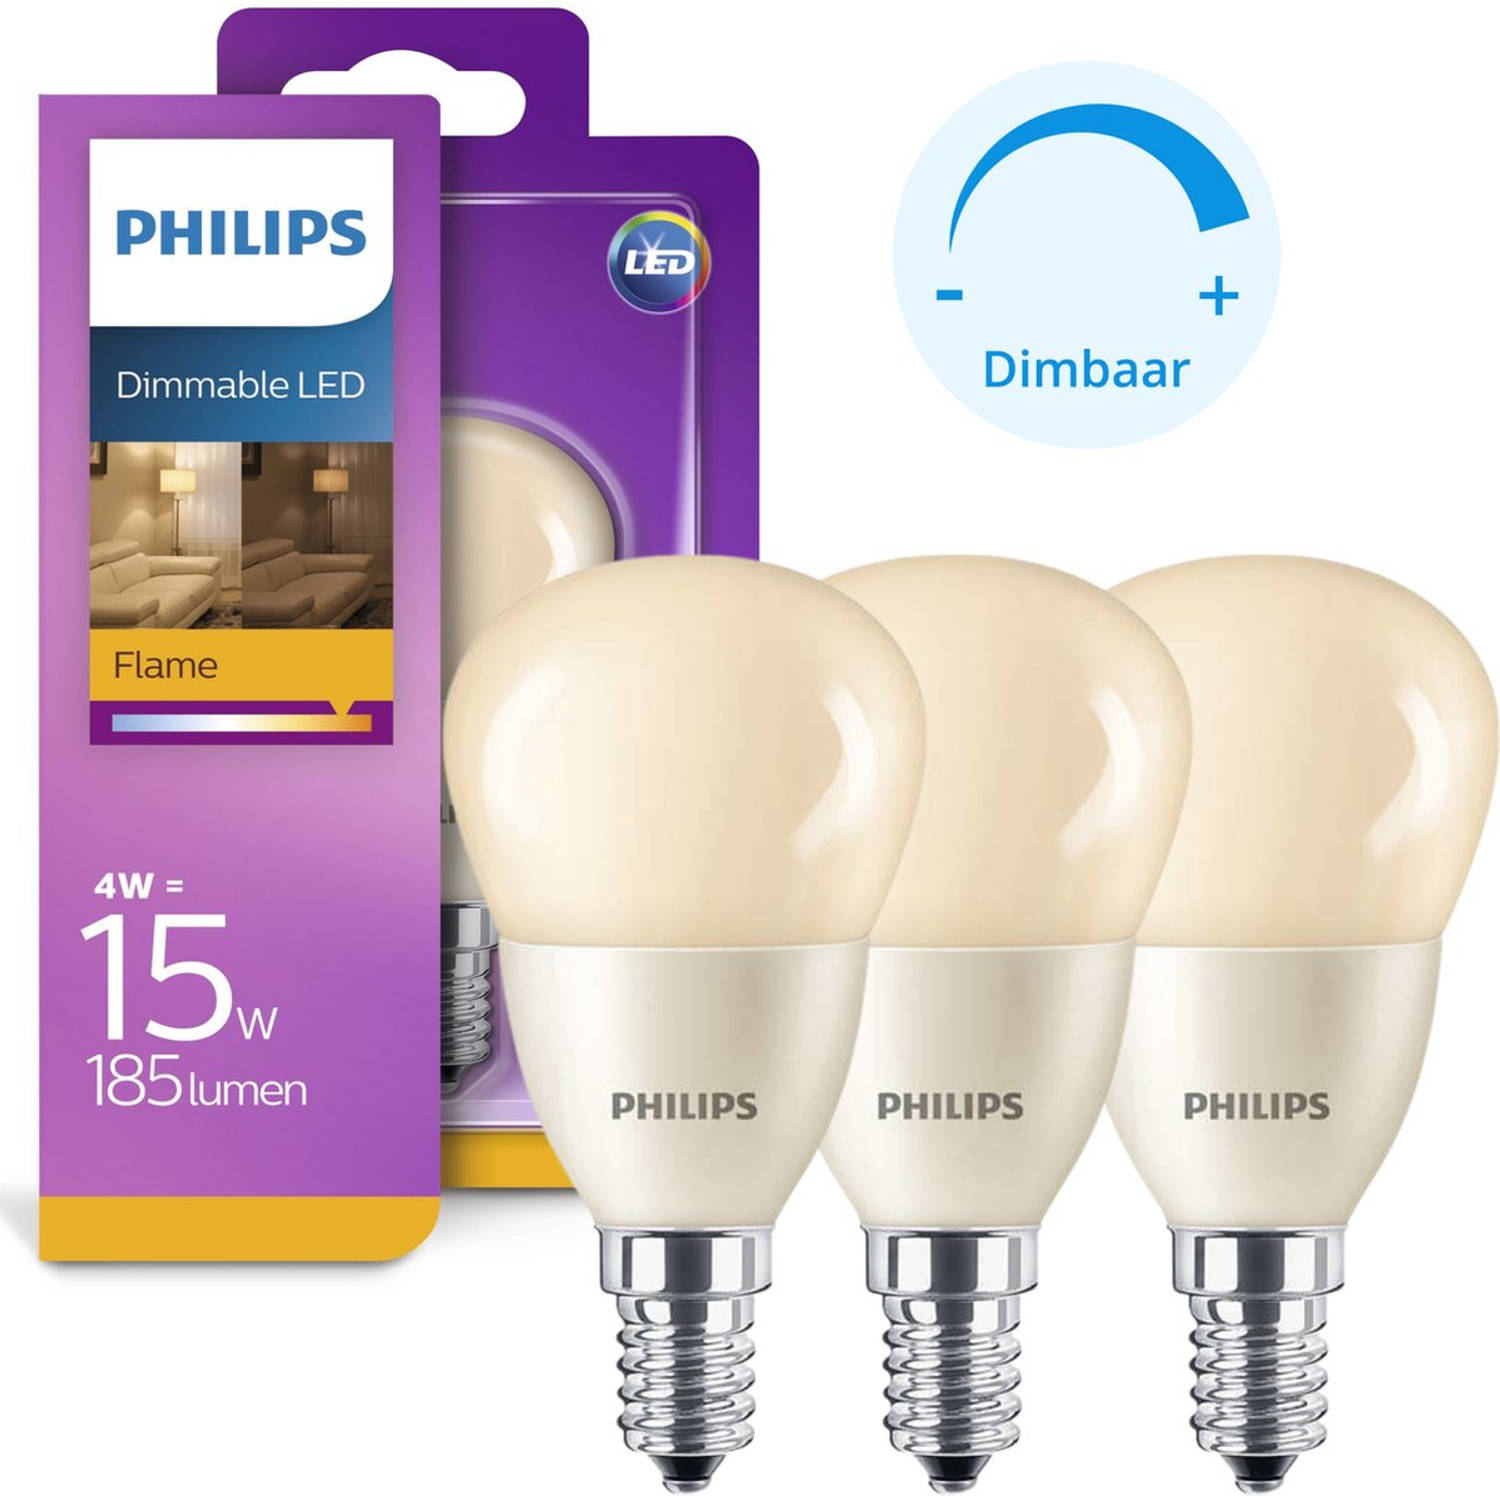 Philips Lamp Flame - E14 fitting - Dimbaar warm wit licht - Kogel - 3 lampen | Blokker